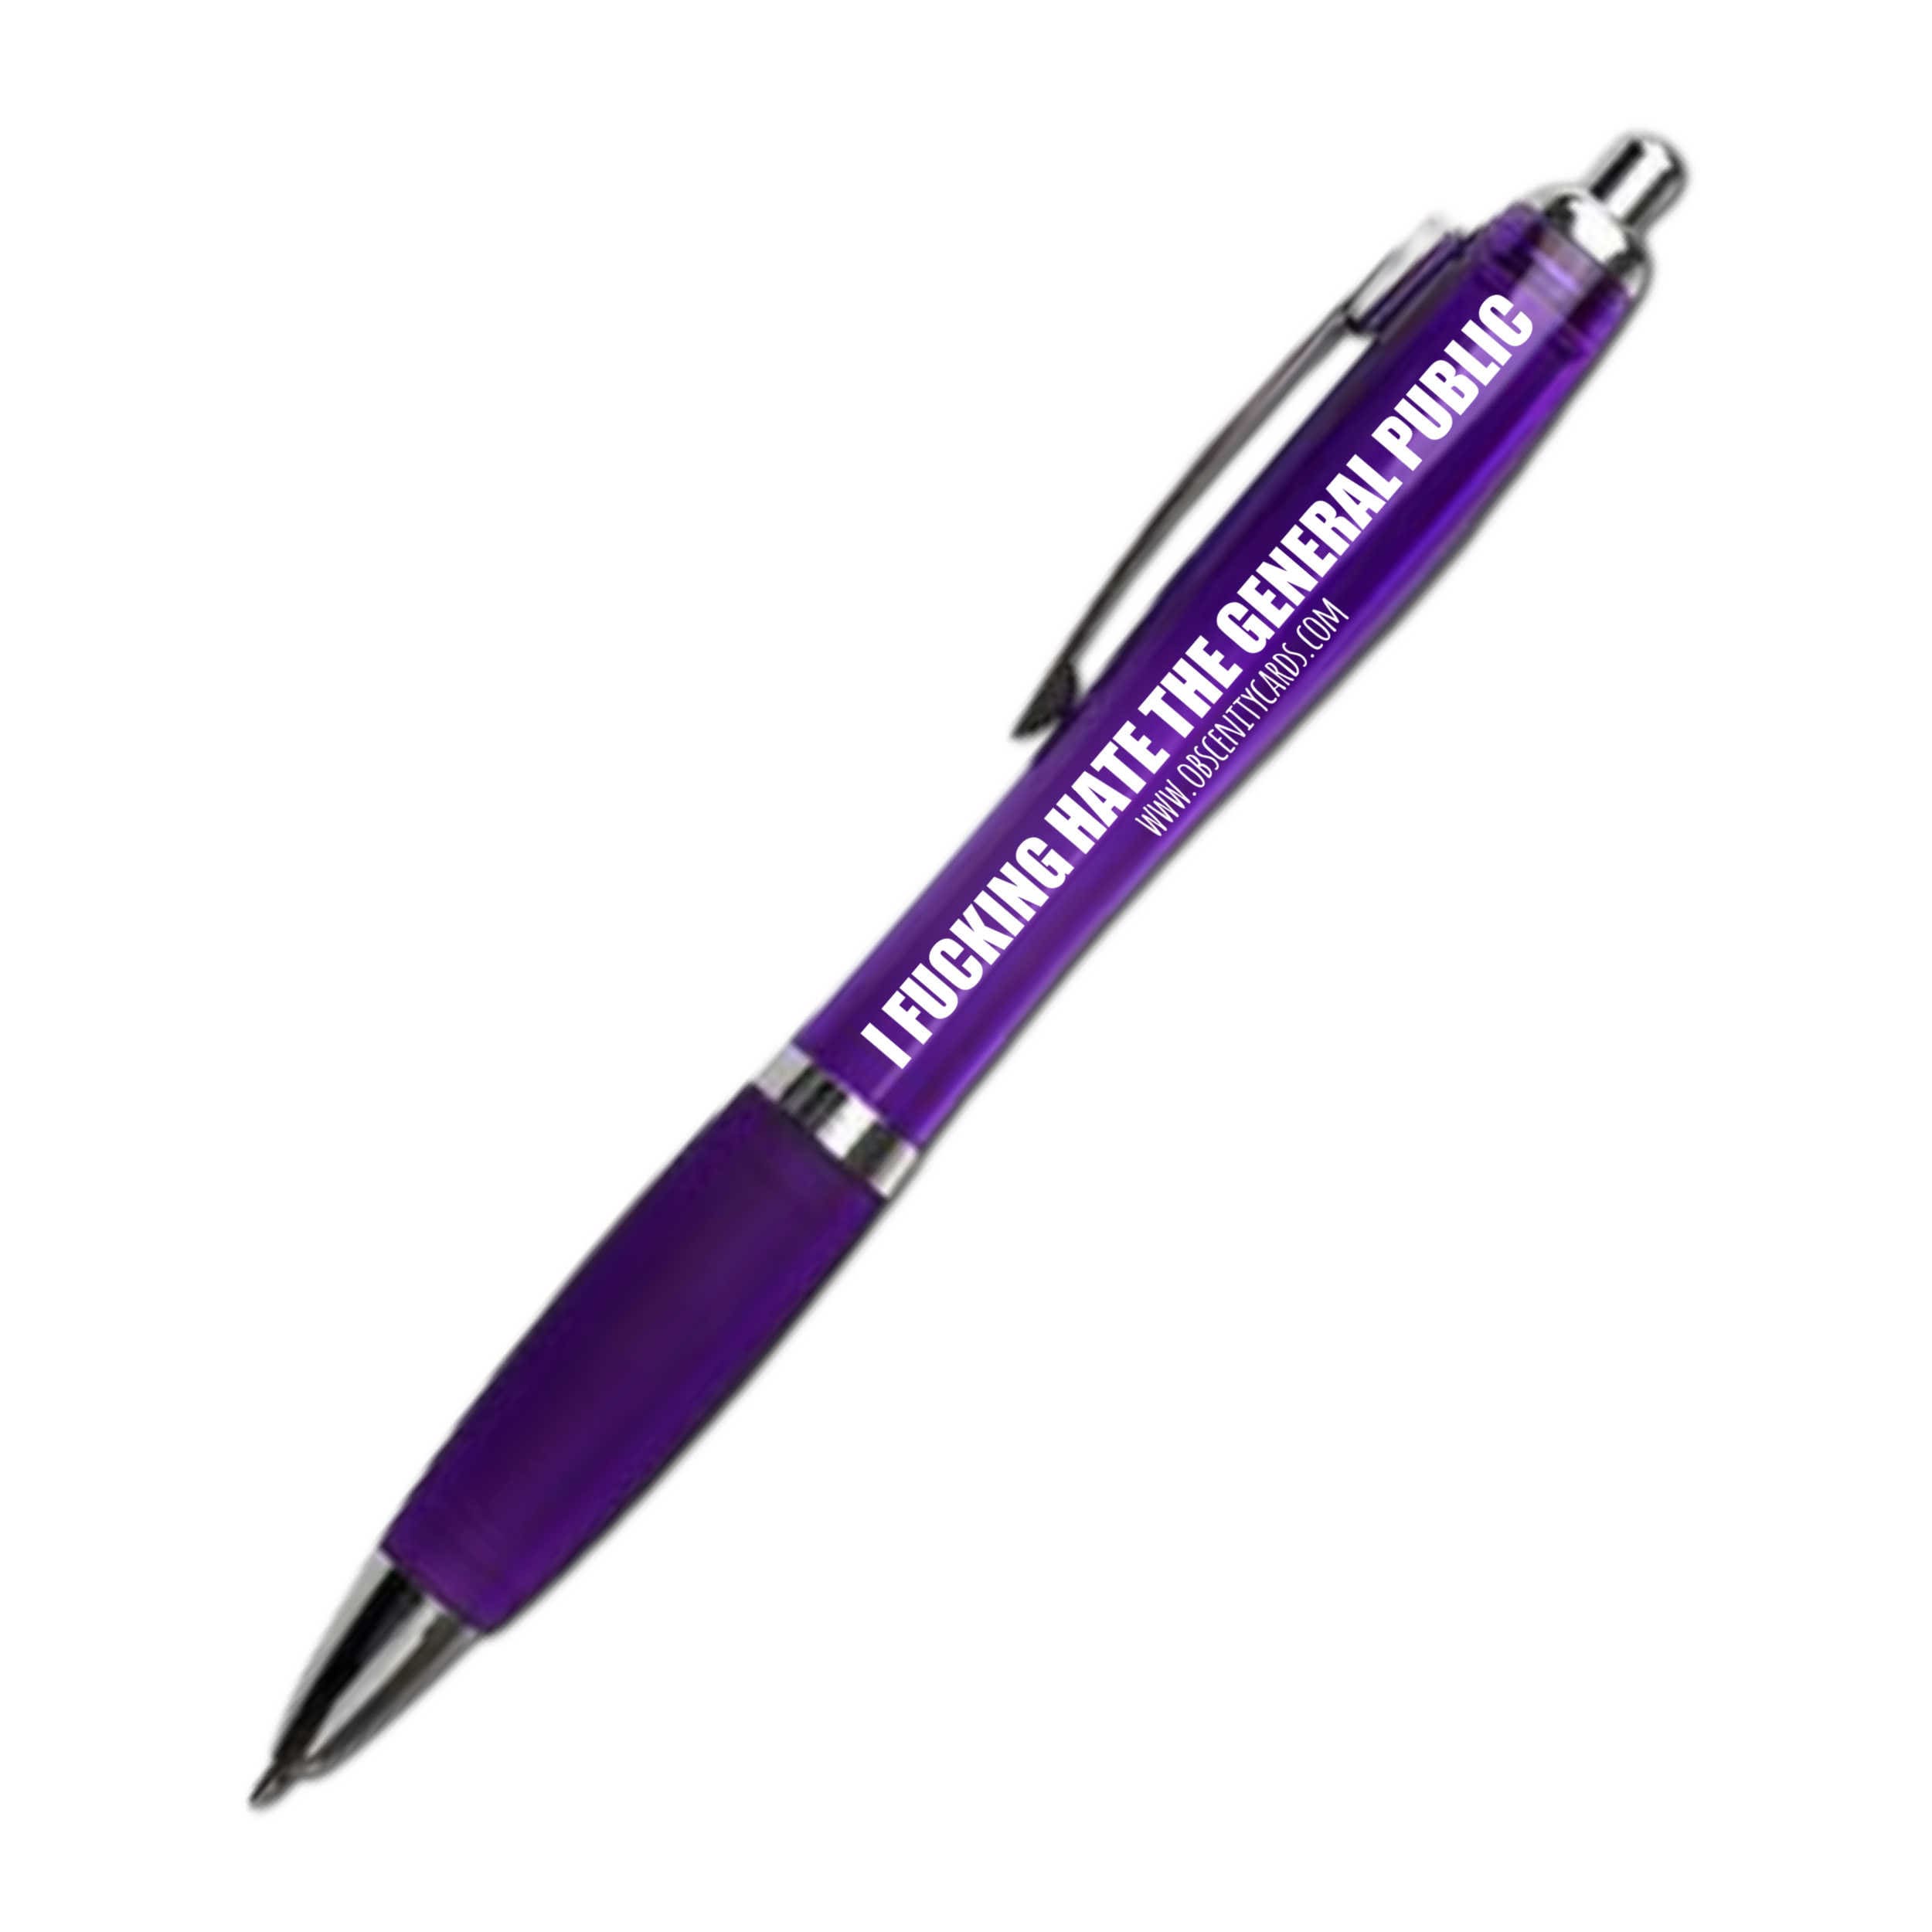 Funny Pens - Rude Cheeky Novelty Office Stationary Secret Santa Sweary Pen  Fun